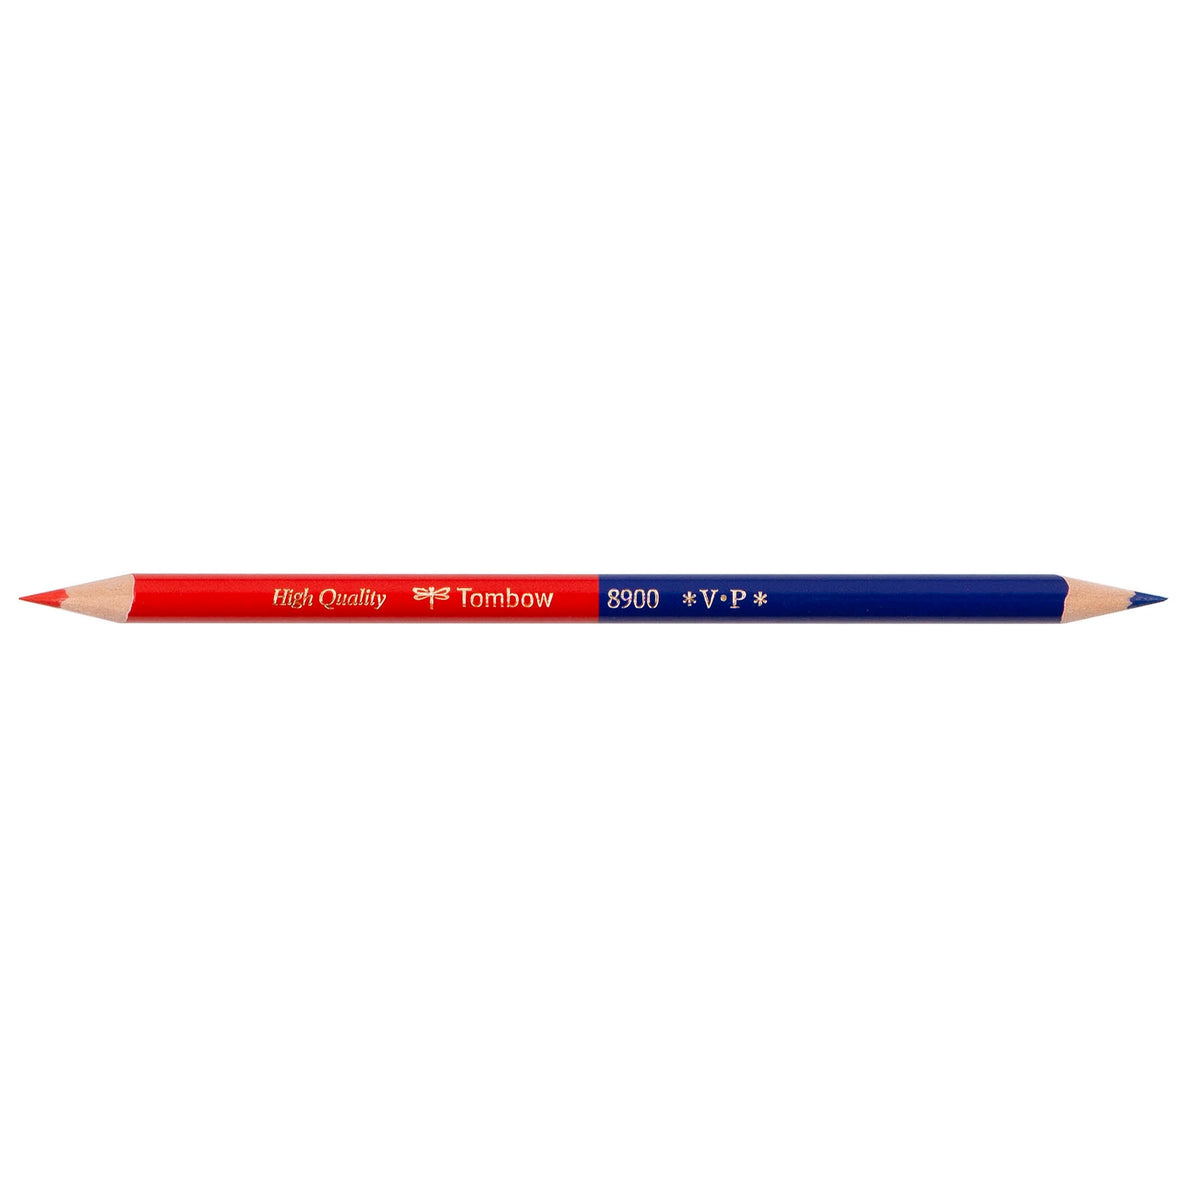 Dual Colored Pencil